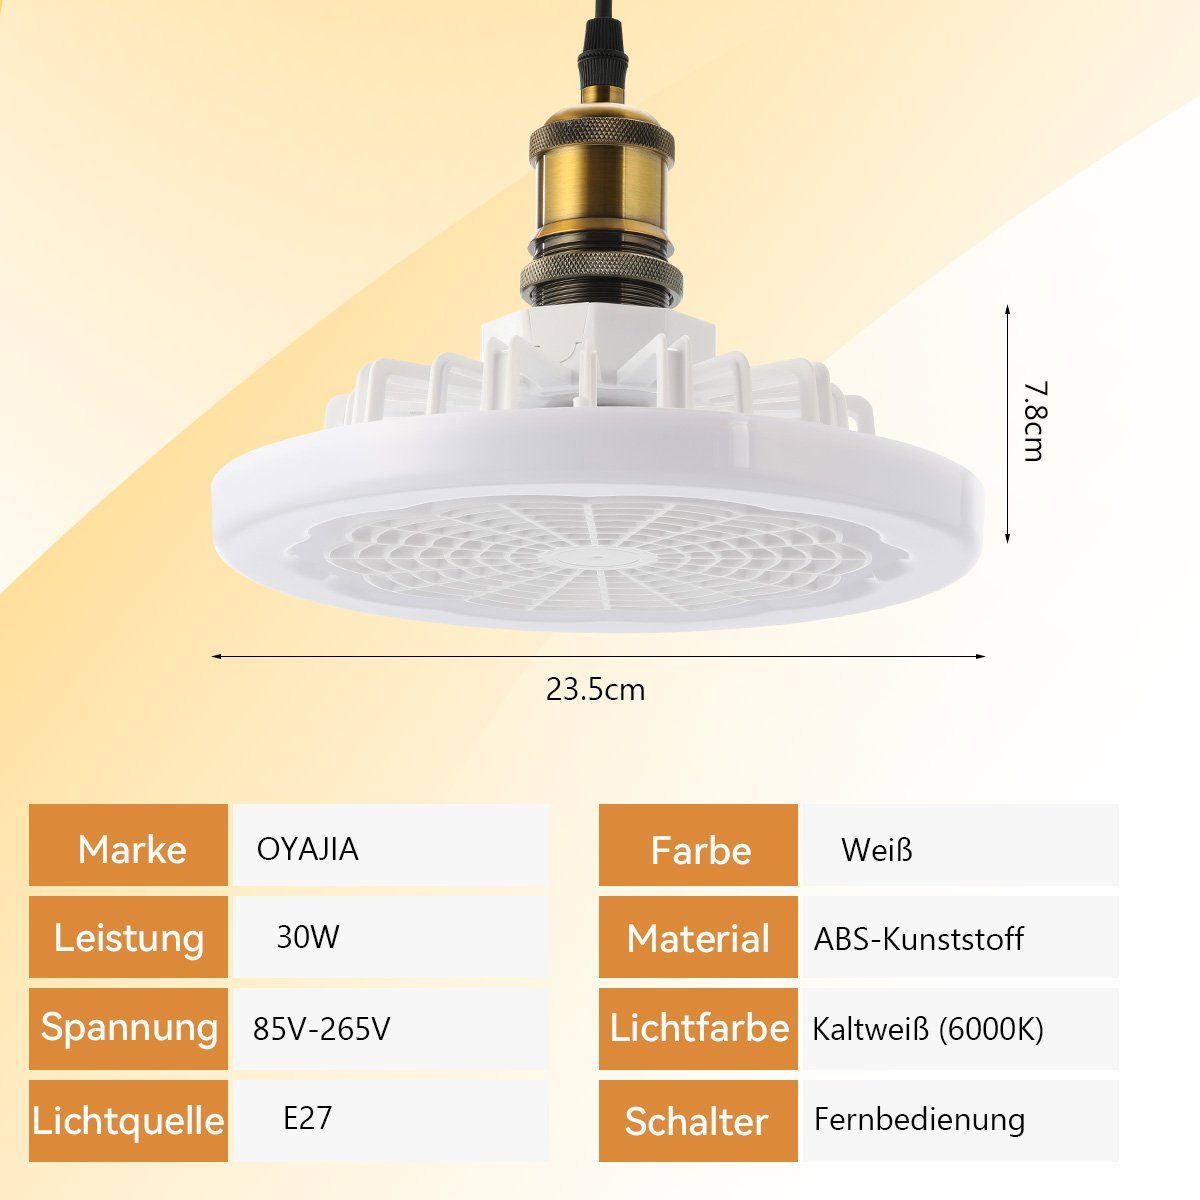 LED Ventilator getrennt mit Deckenventilator, Deckenventilator iscooter mit Leuchte/ - Deckenleuchte φ23,5cm 26cm,Dimmbar Ventilator 30W E27 3-stufiger, Fernbedienung, schaltbar Deckenleuchte Fernbedienung,